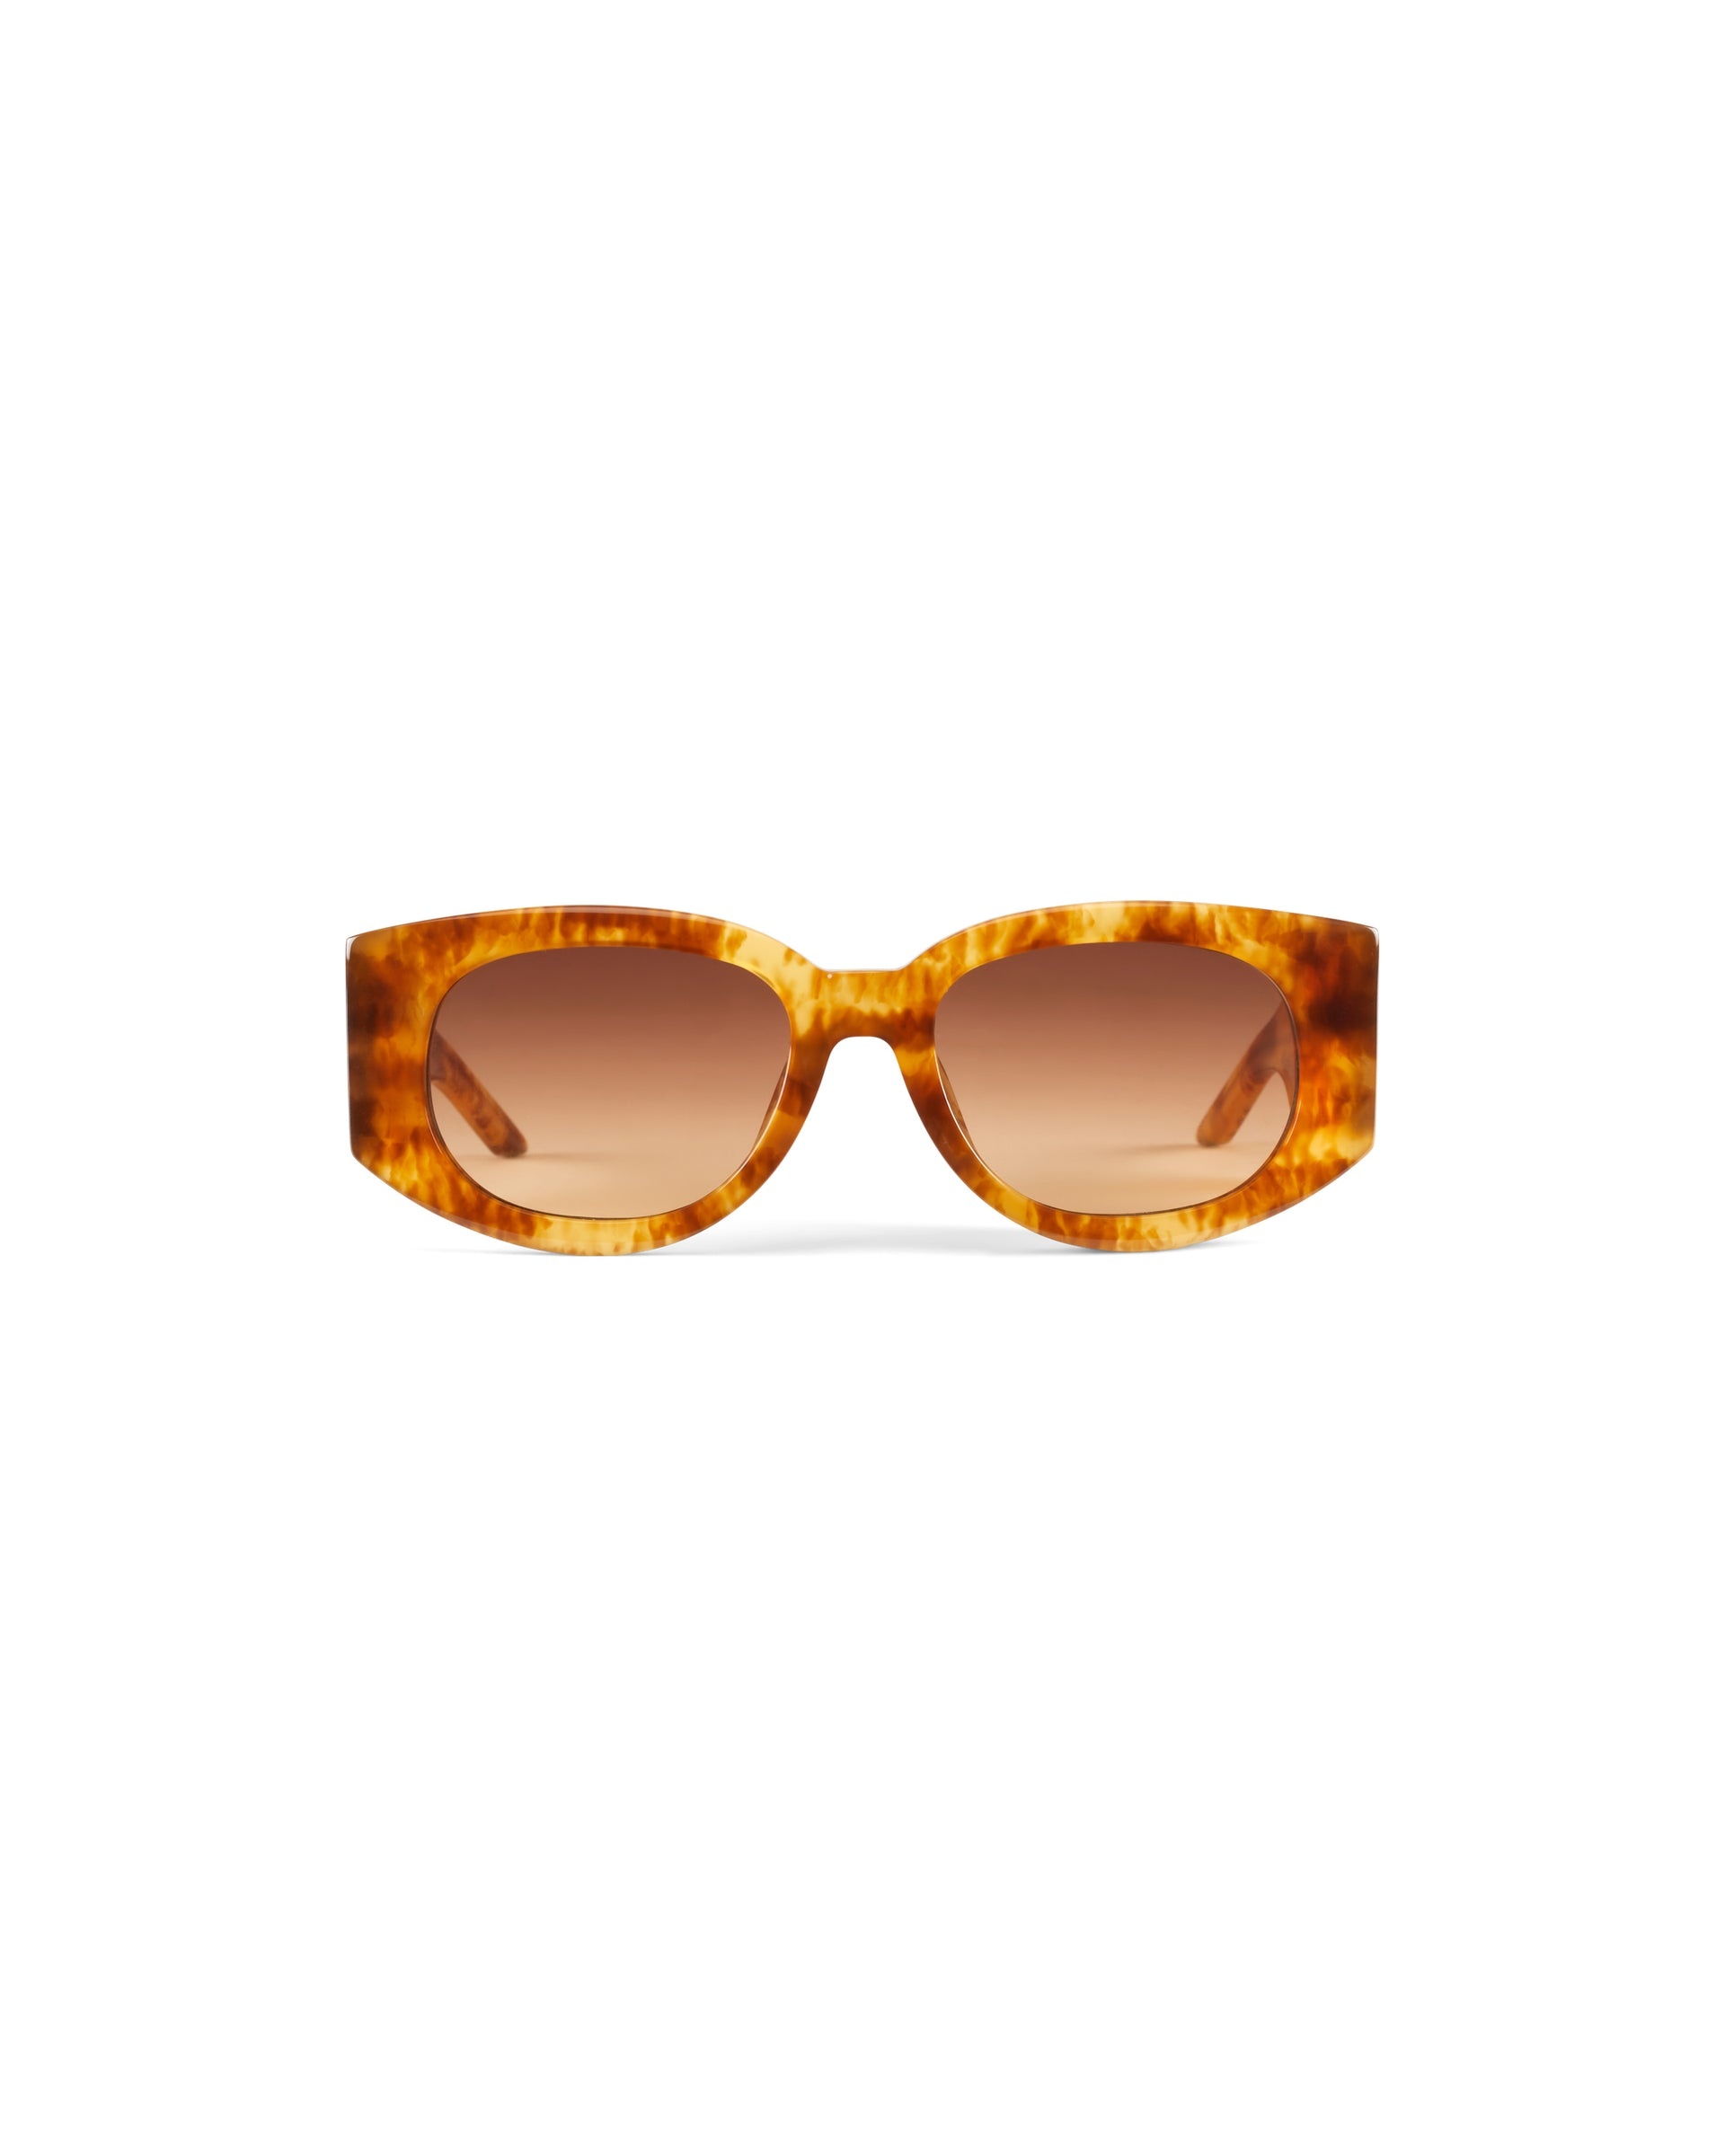 Memphis Gold & Brown Sunglasses - 2